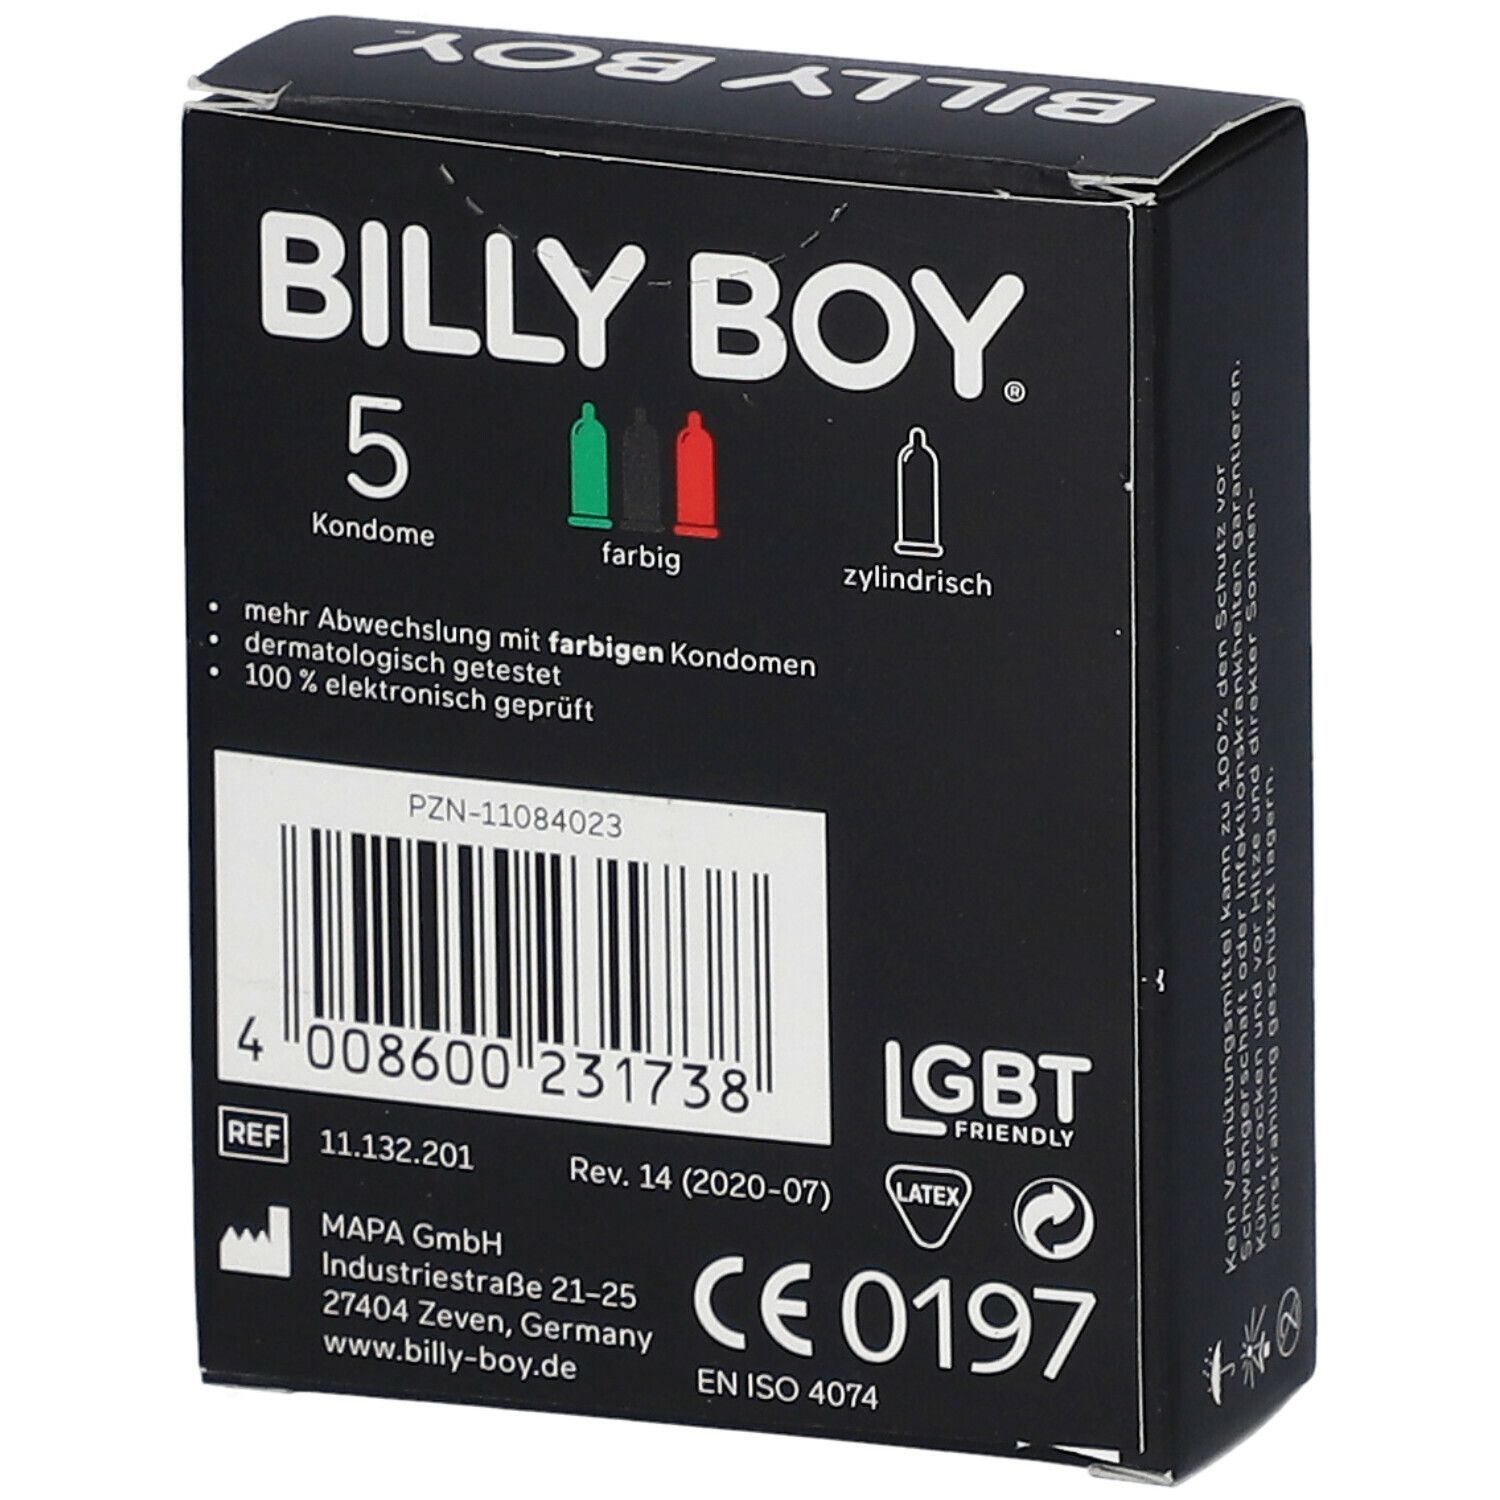 BILLY BOY  Kondome Bunte Vielfalt